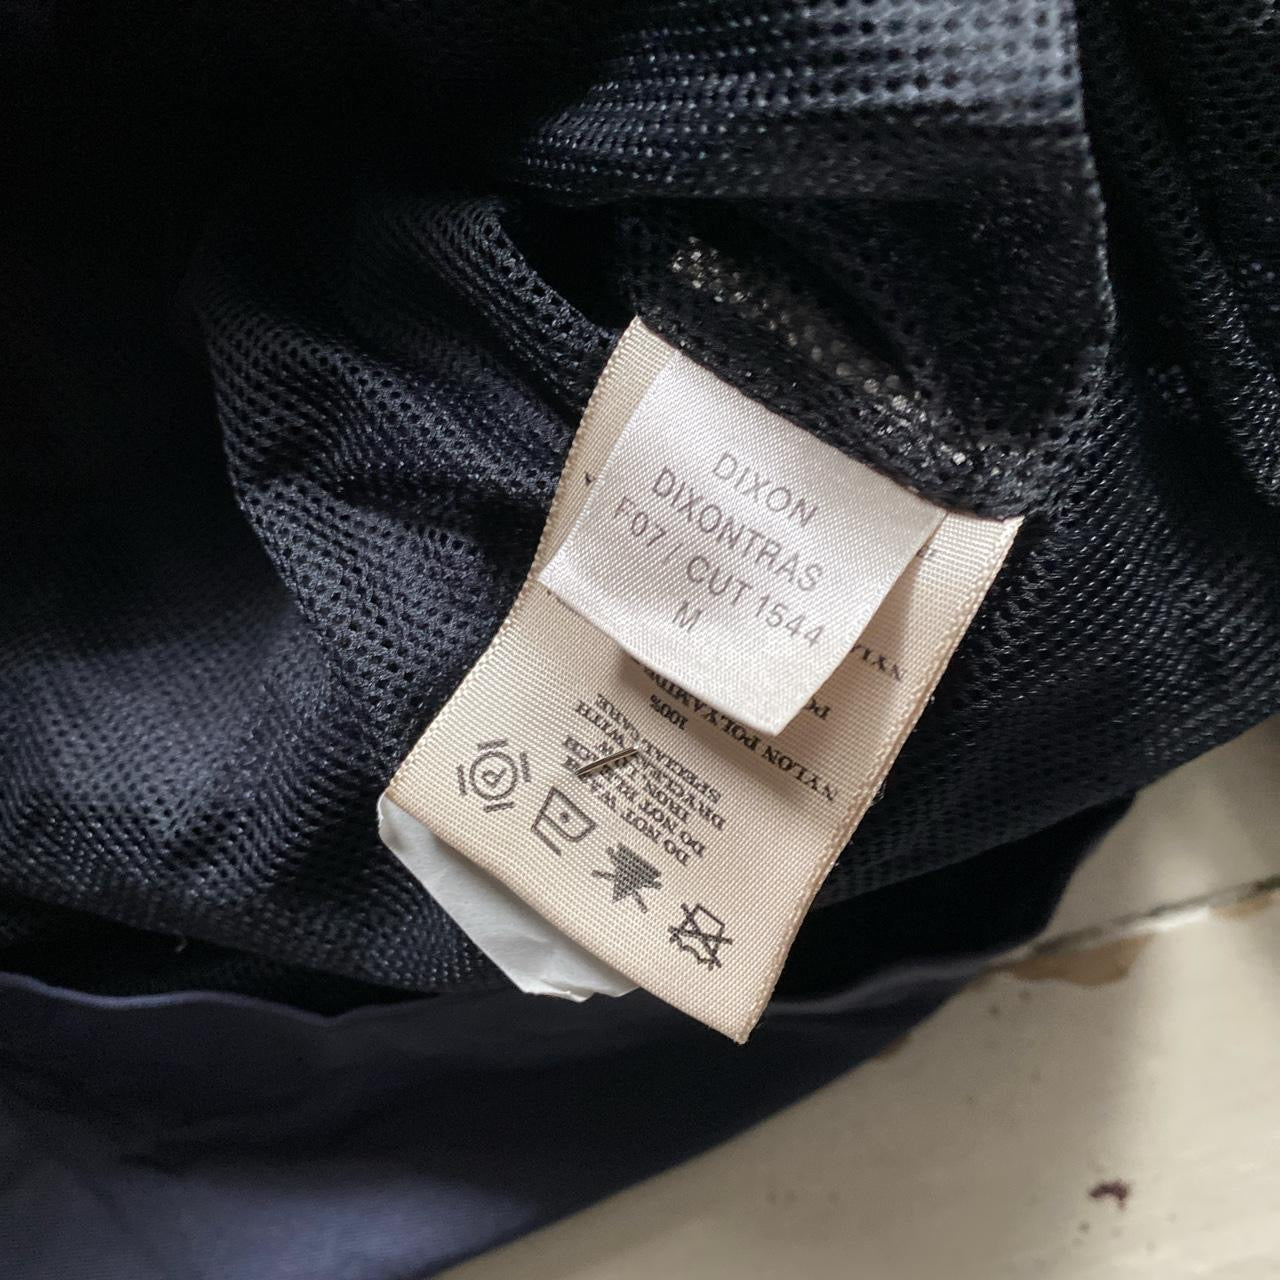 Burberry Nova Check Jacket (Medium)